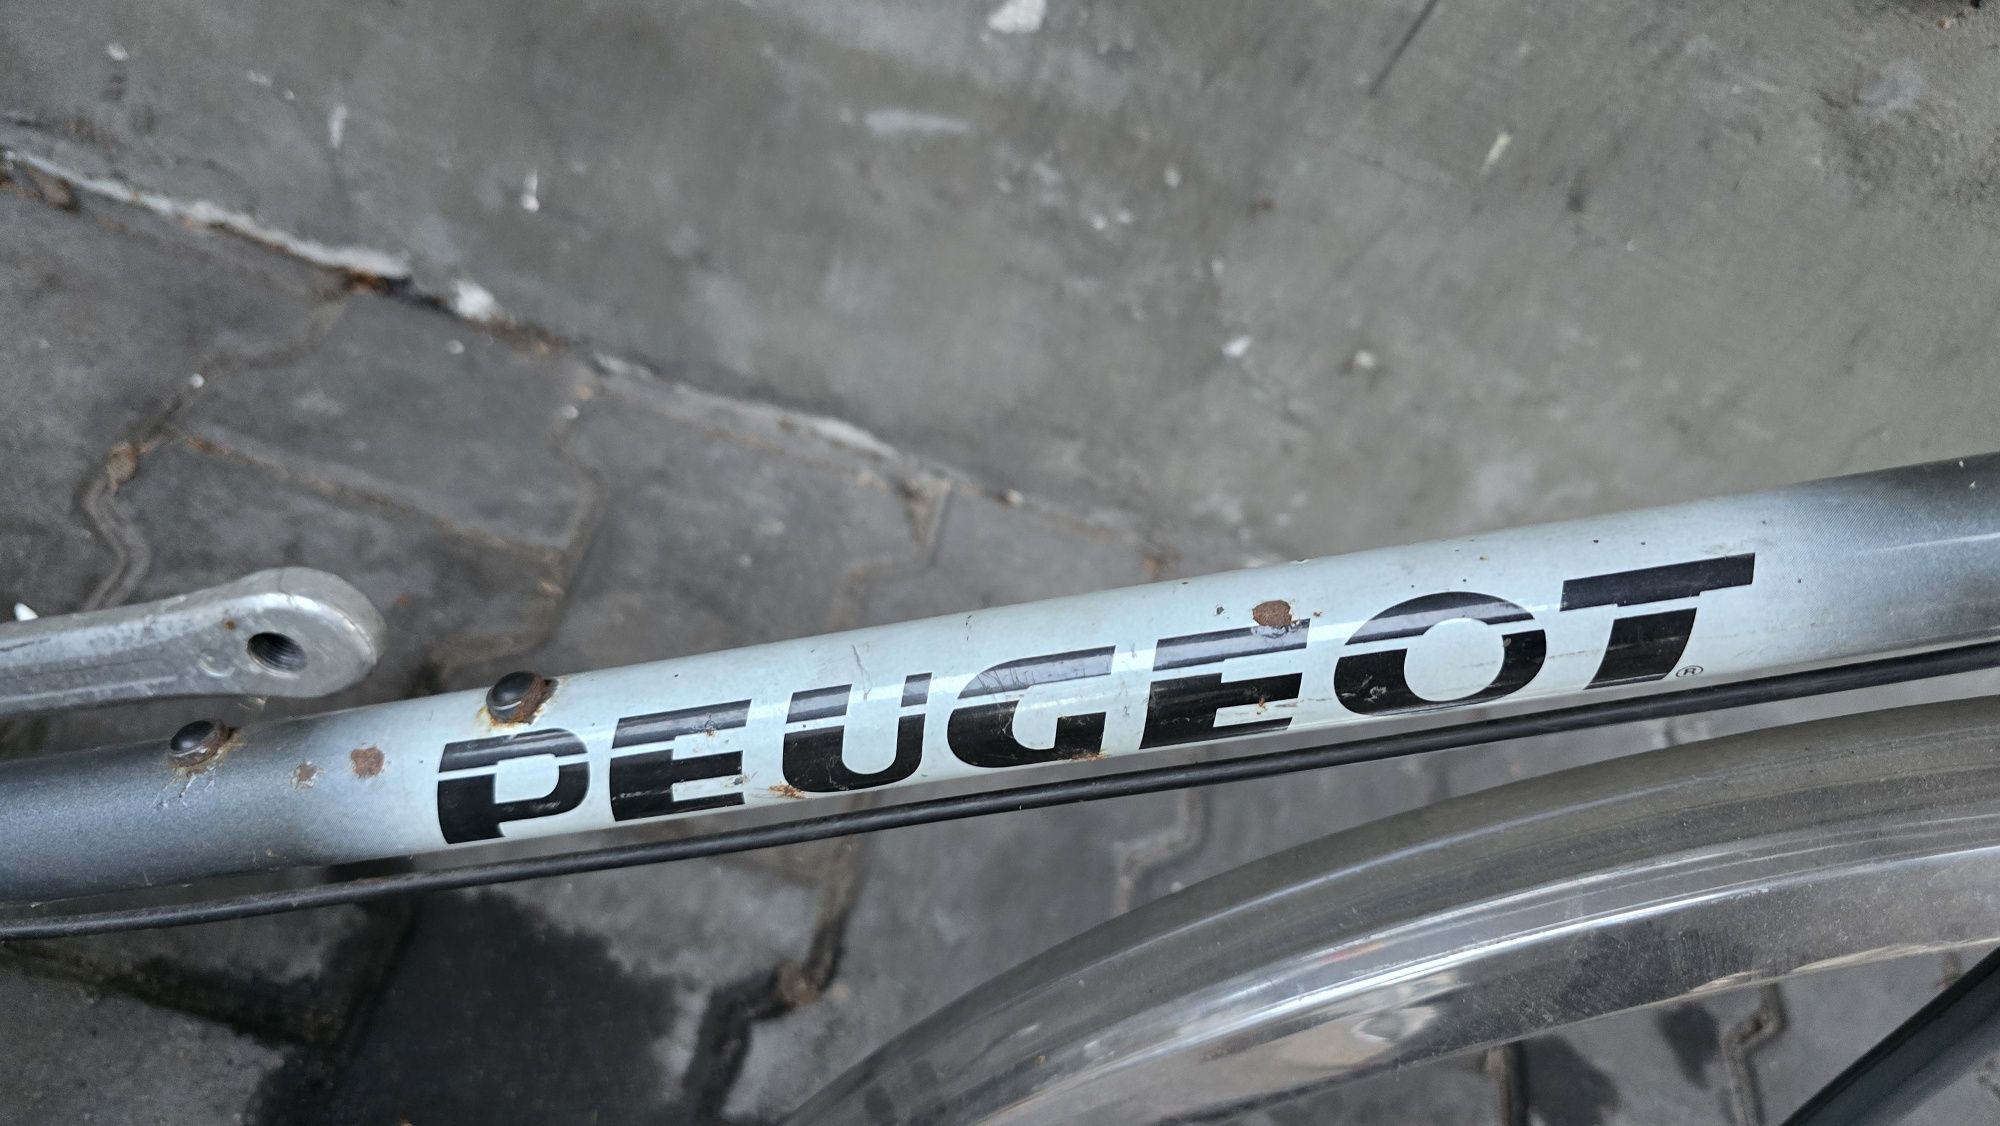 Rama rower Peugeot PARIS Vintage z Epoki przerzutki ładny